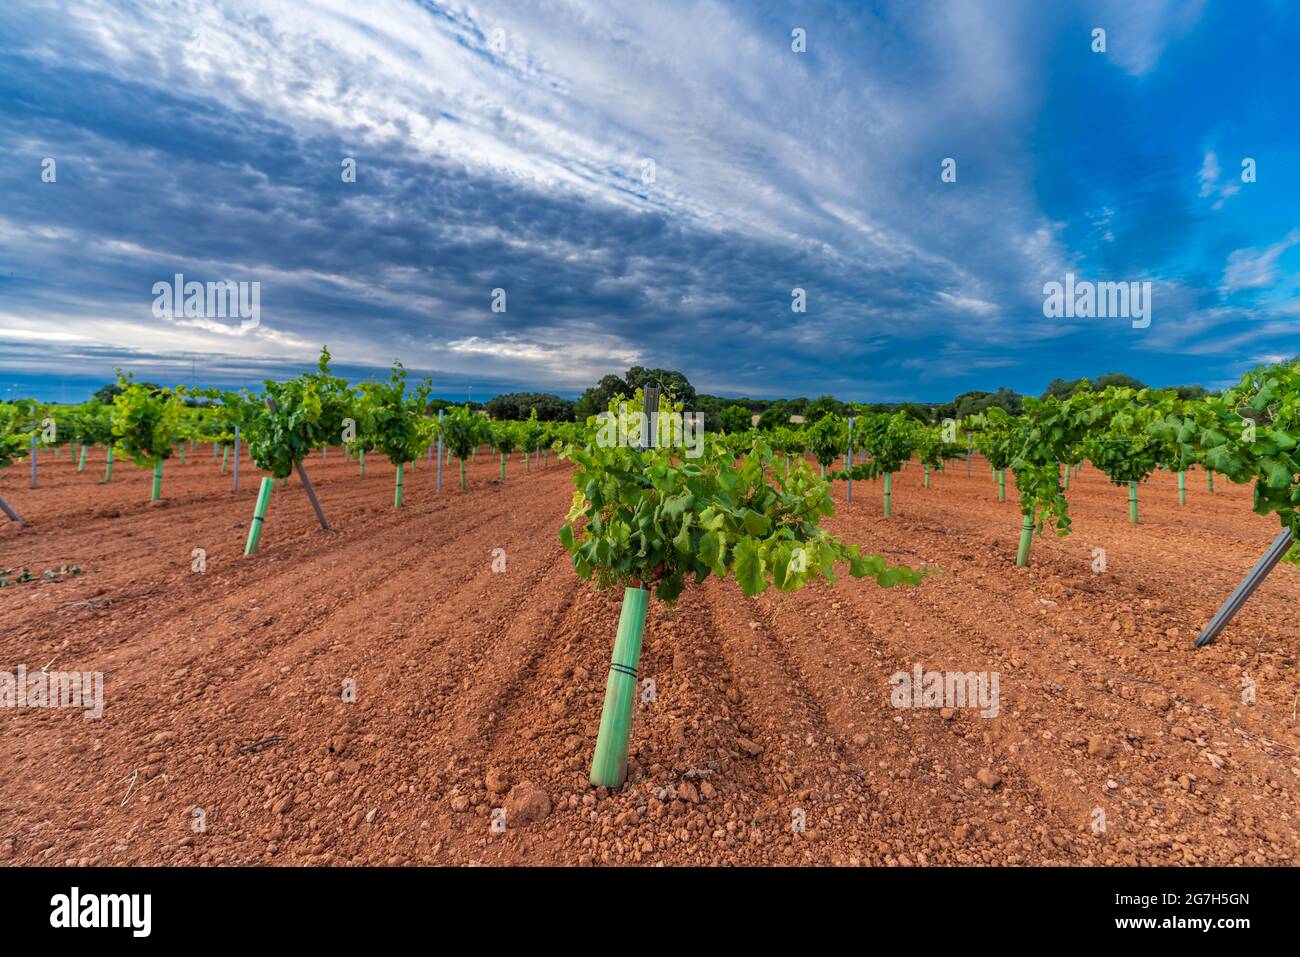 Vast vineyard rows under the cloudy sky Stock Photo